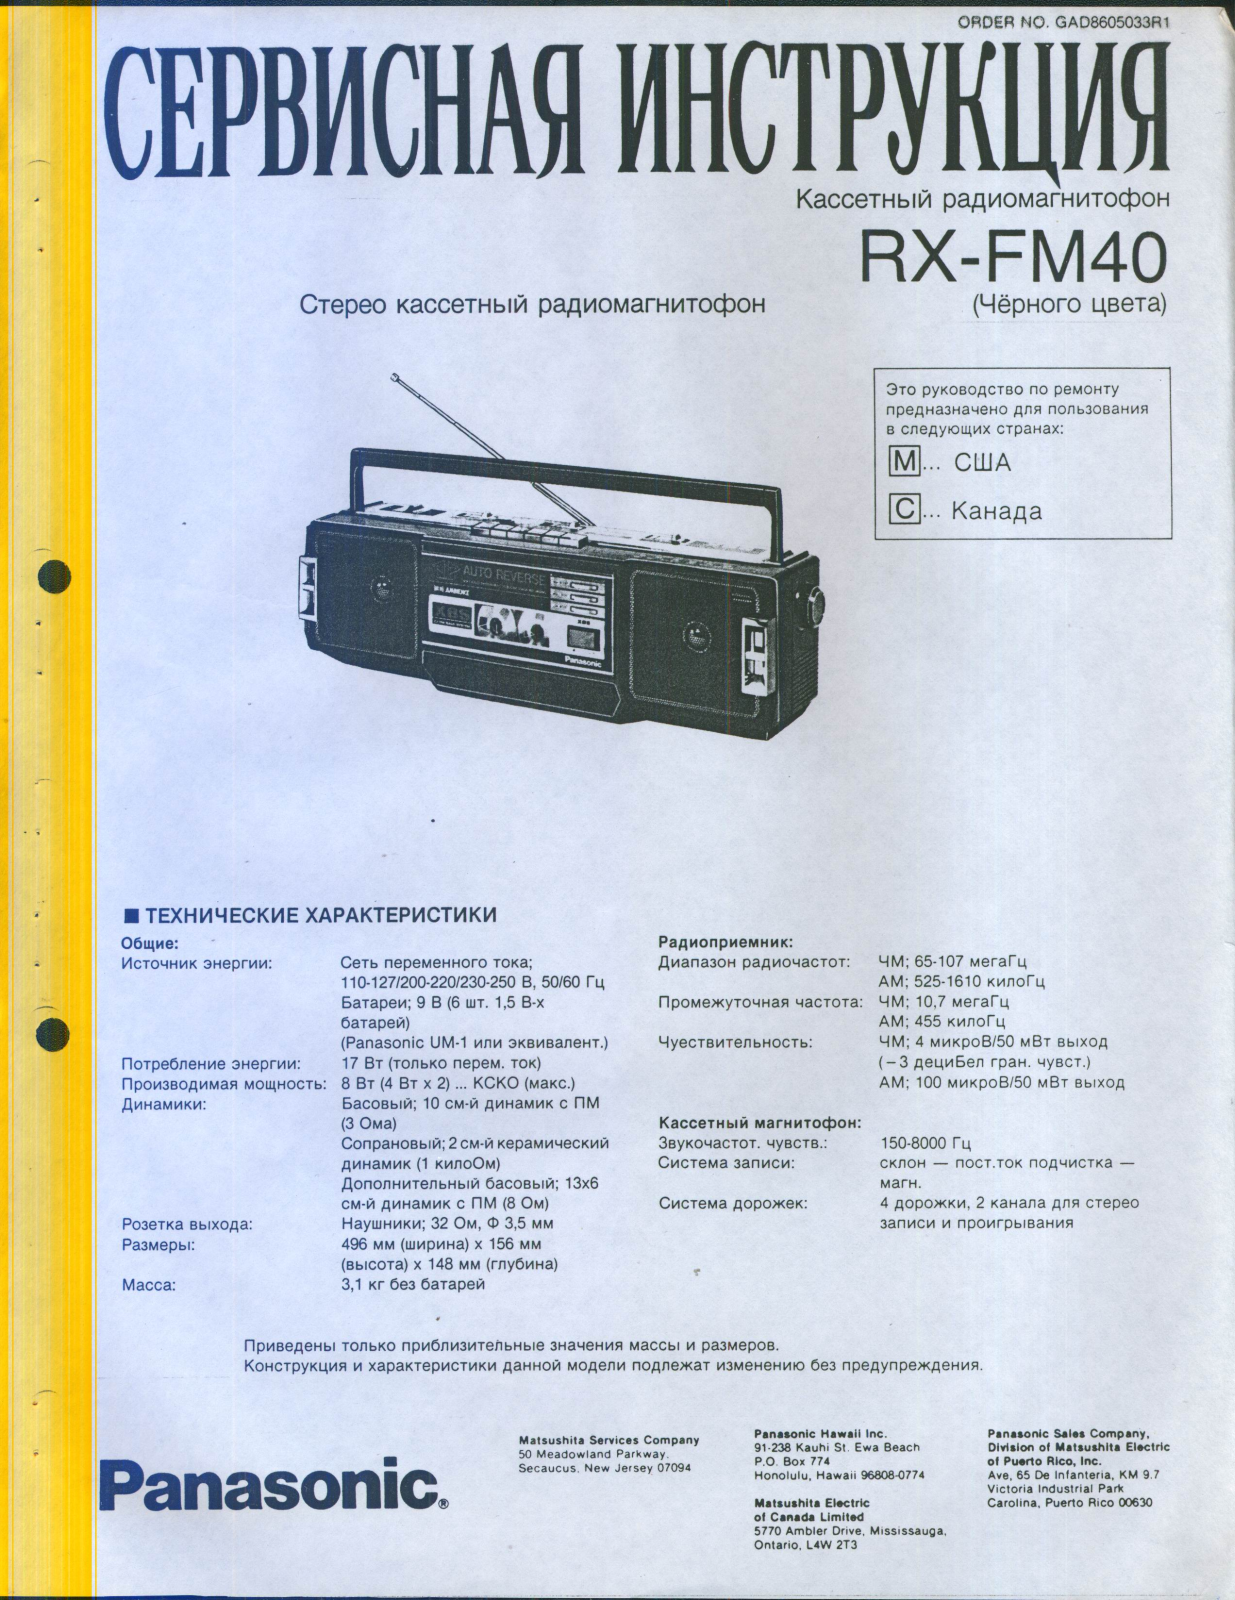 Panasonic RX-FM40 Service manual